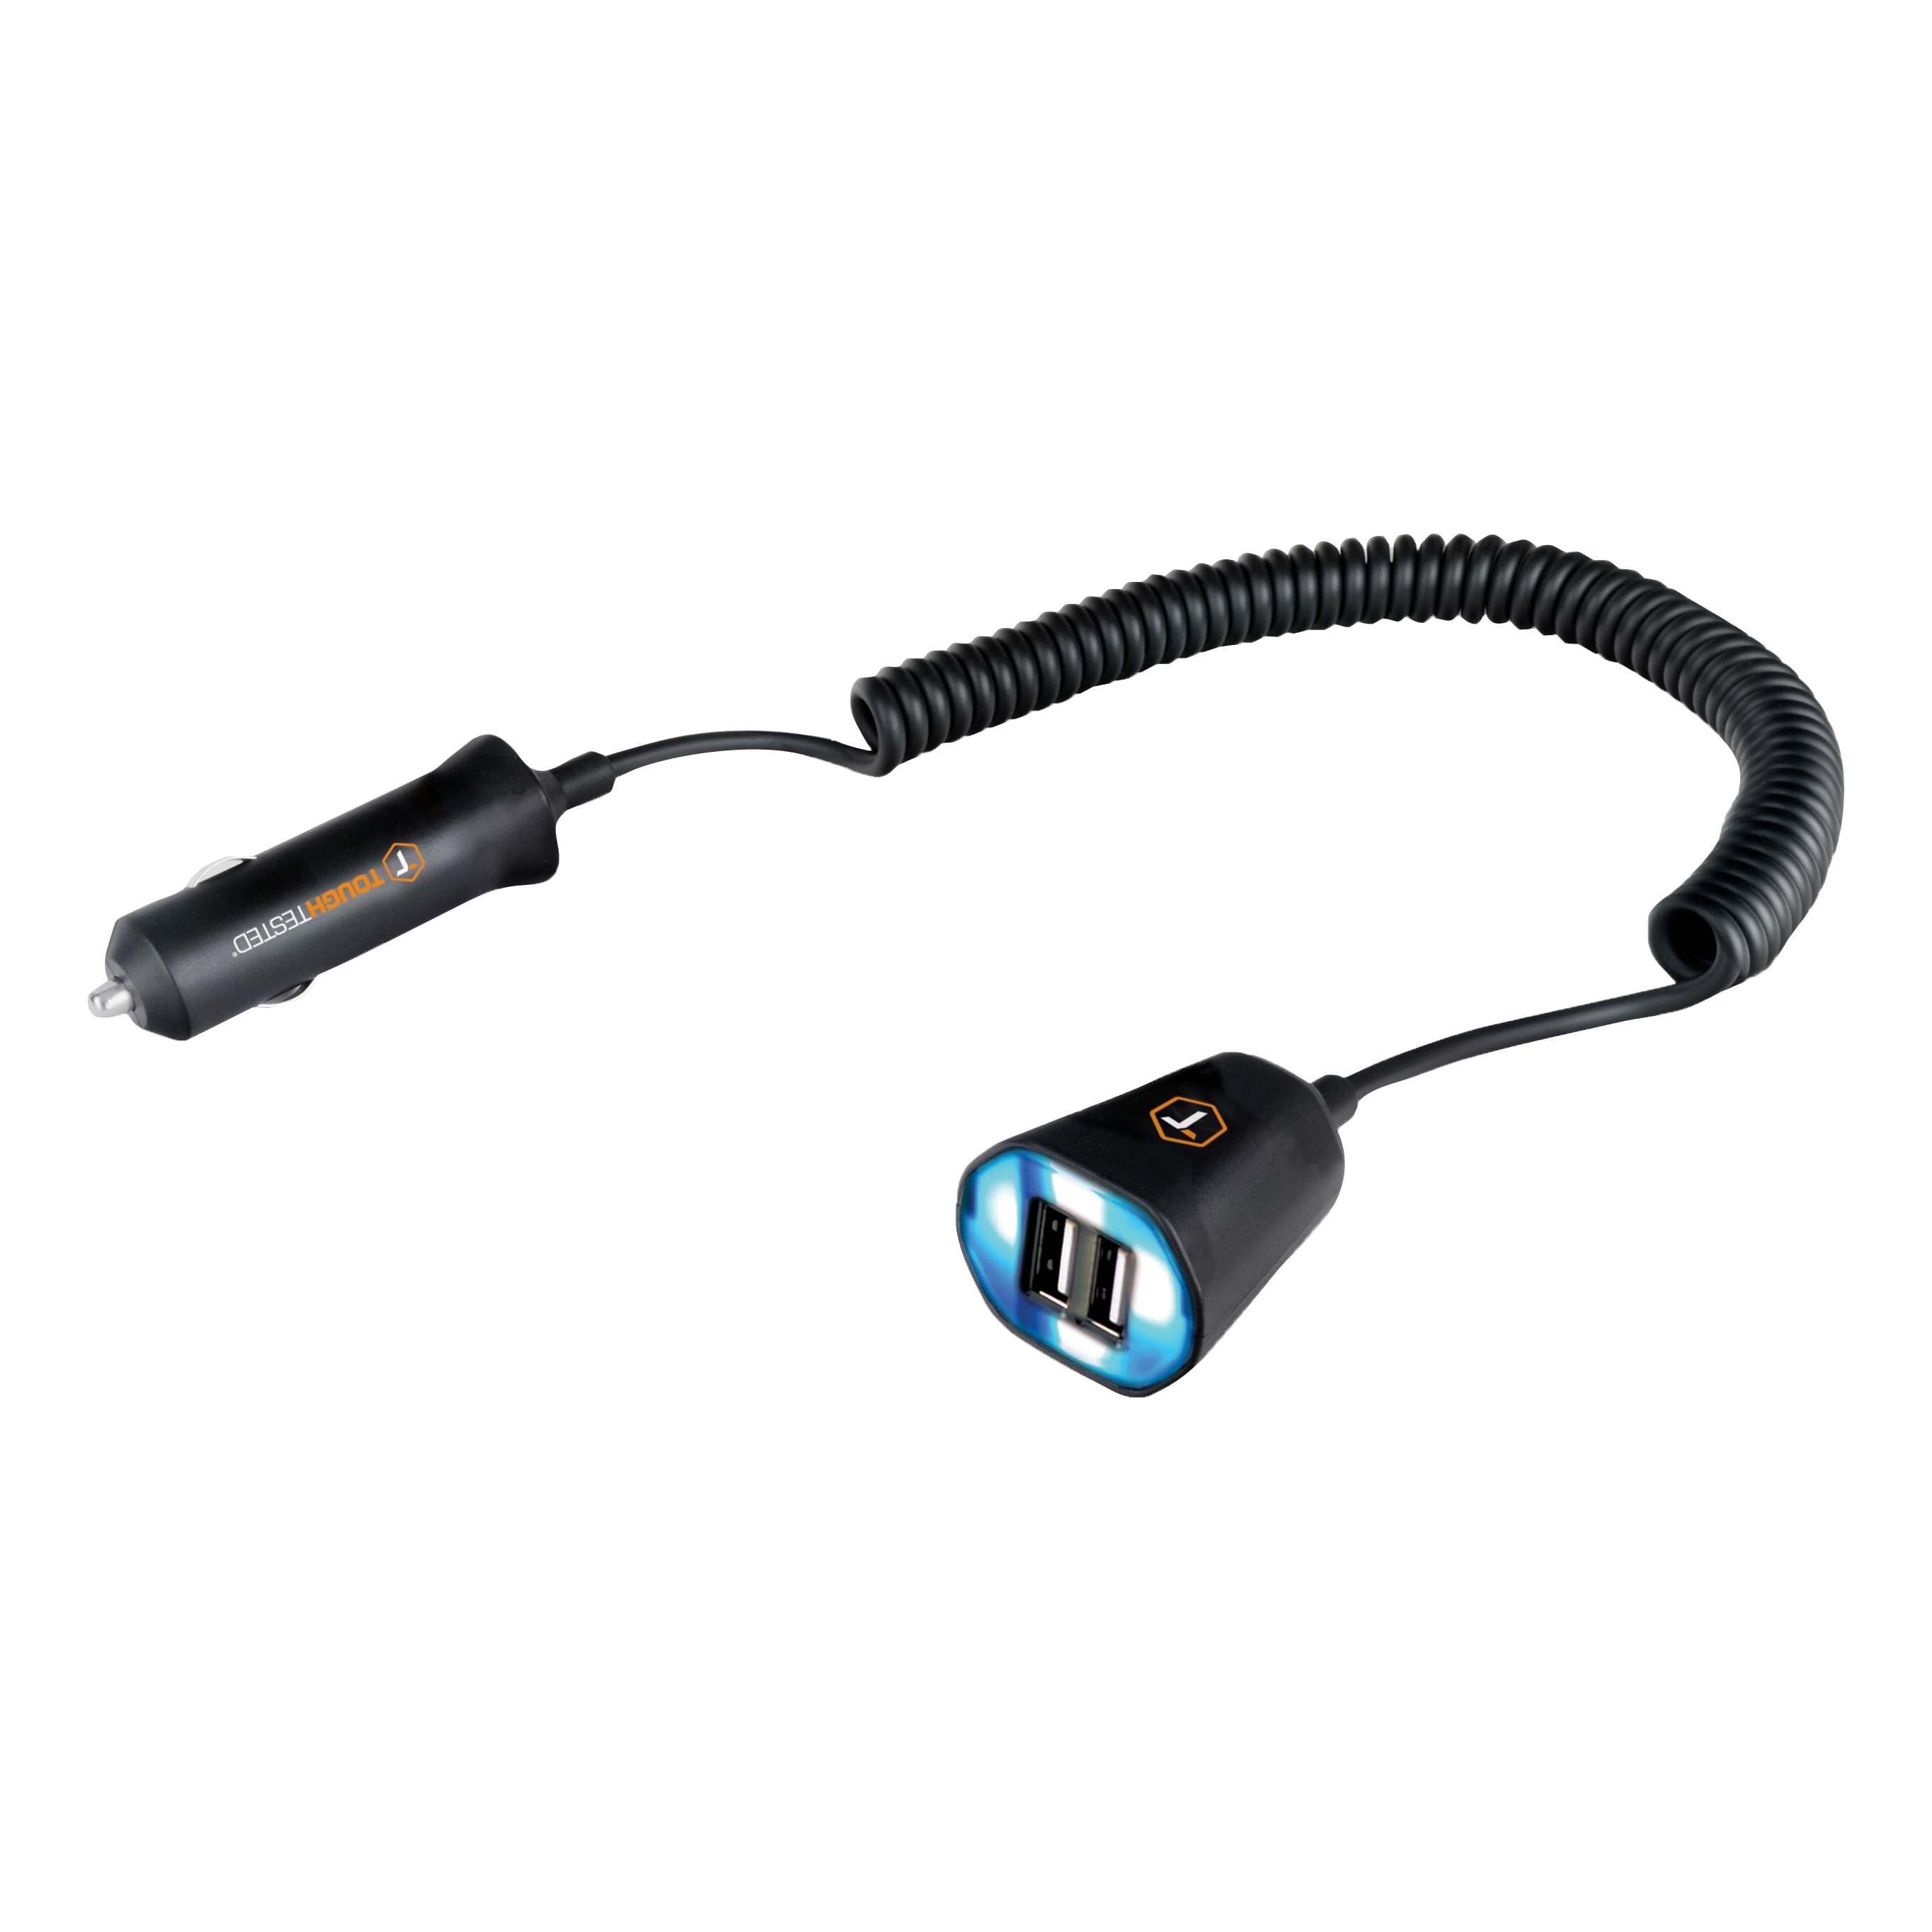 Tough Tested® 3.1 Amp 8' Dual USB Car Charger